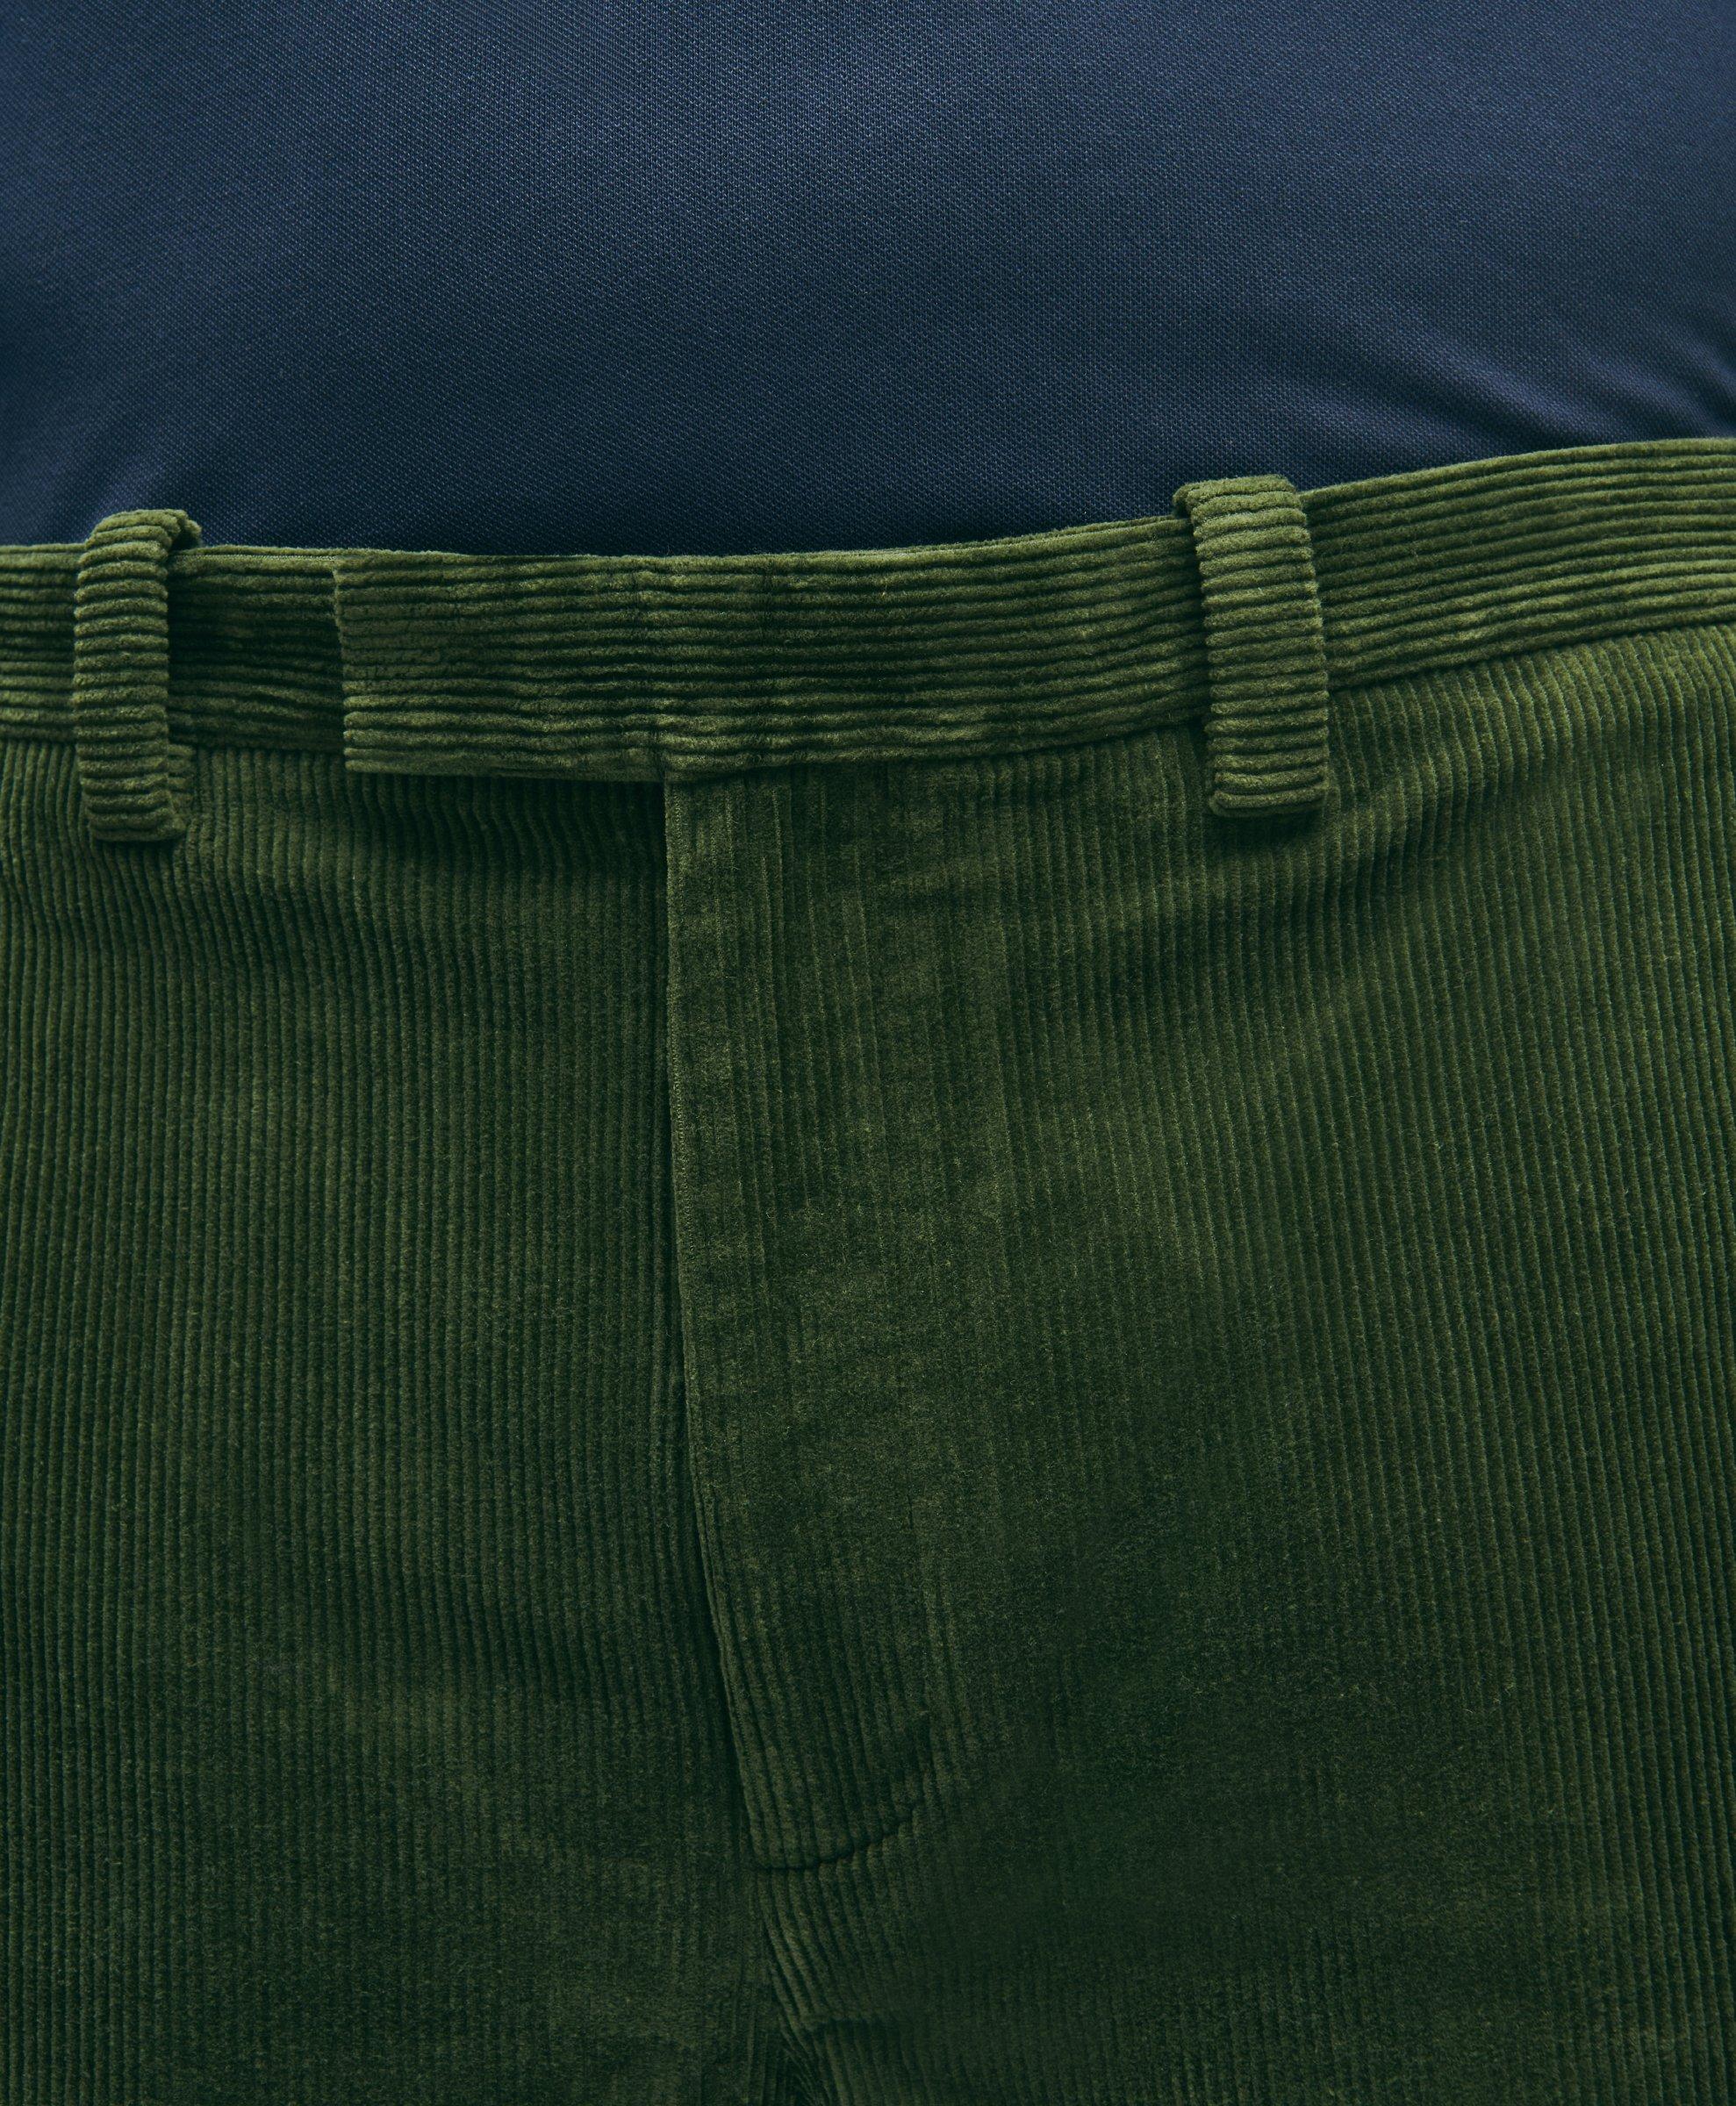 Pine Woods Mens Corduroy Pants Limited Edition Dark Khaki Green Corduroy  Trousers for Men Big and Tall Men Custom Orders 